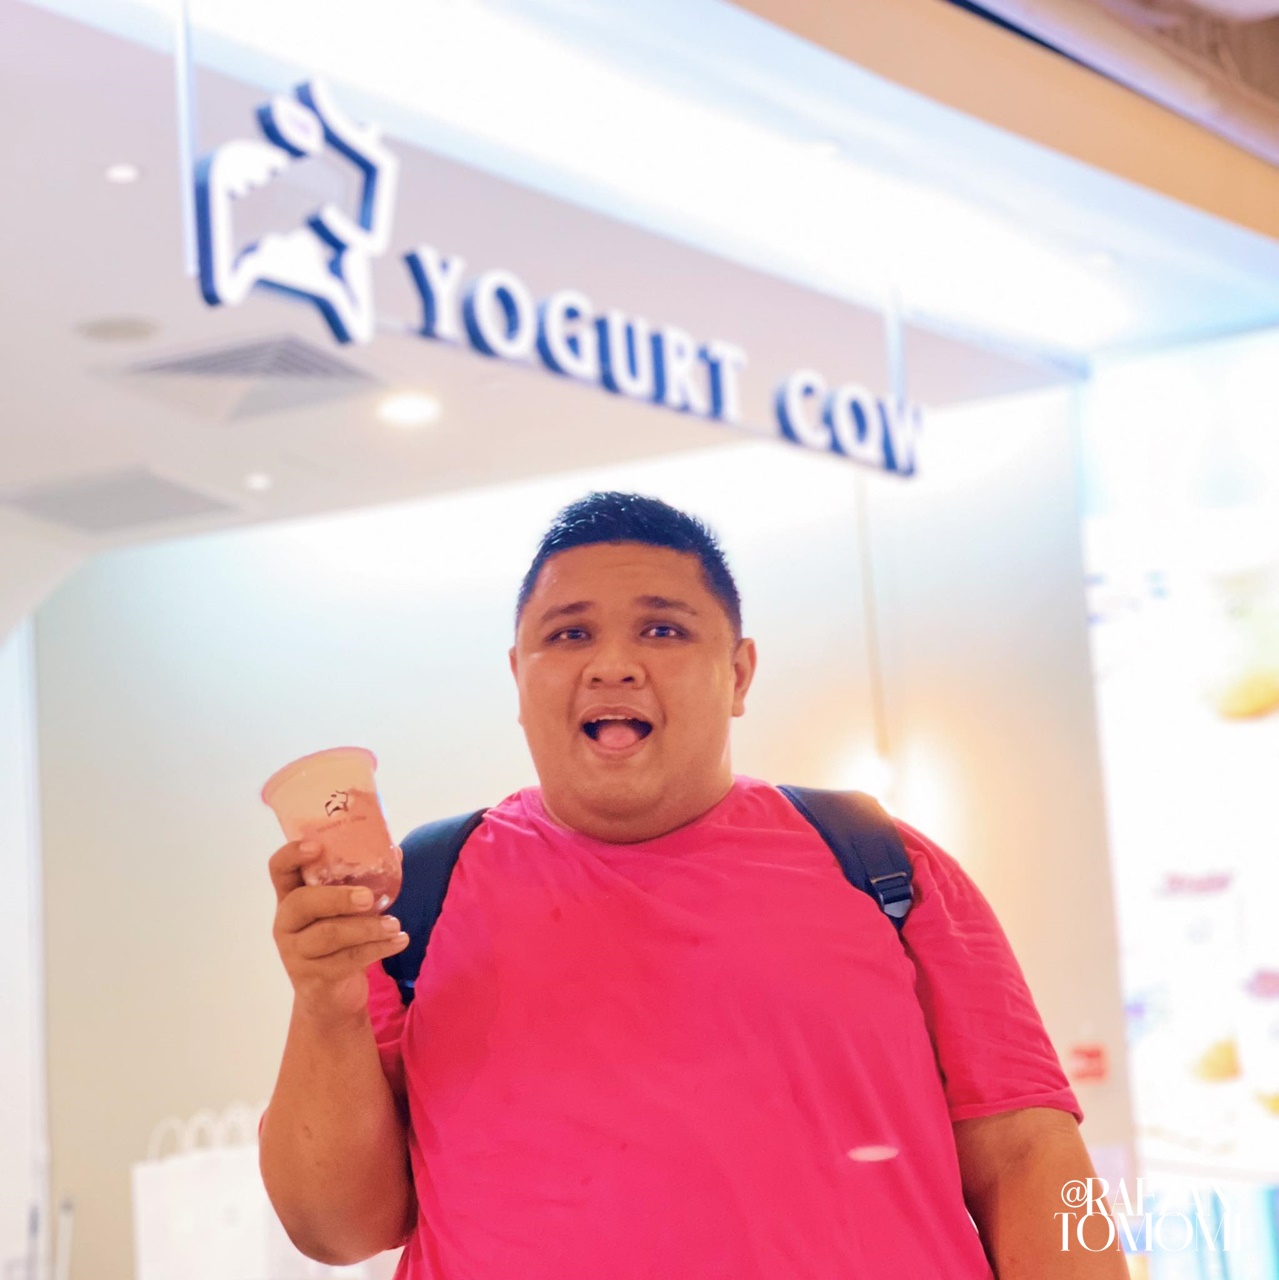 Yogurt Cow Malaysia - Minuman Sihat & Yogurt